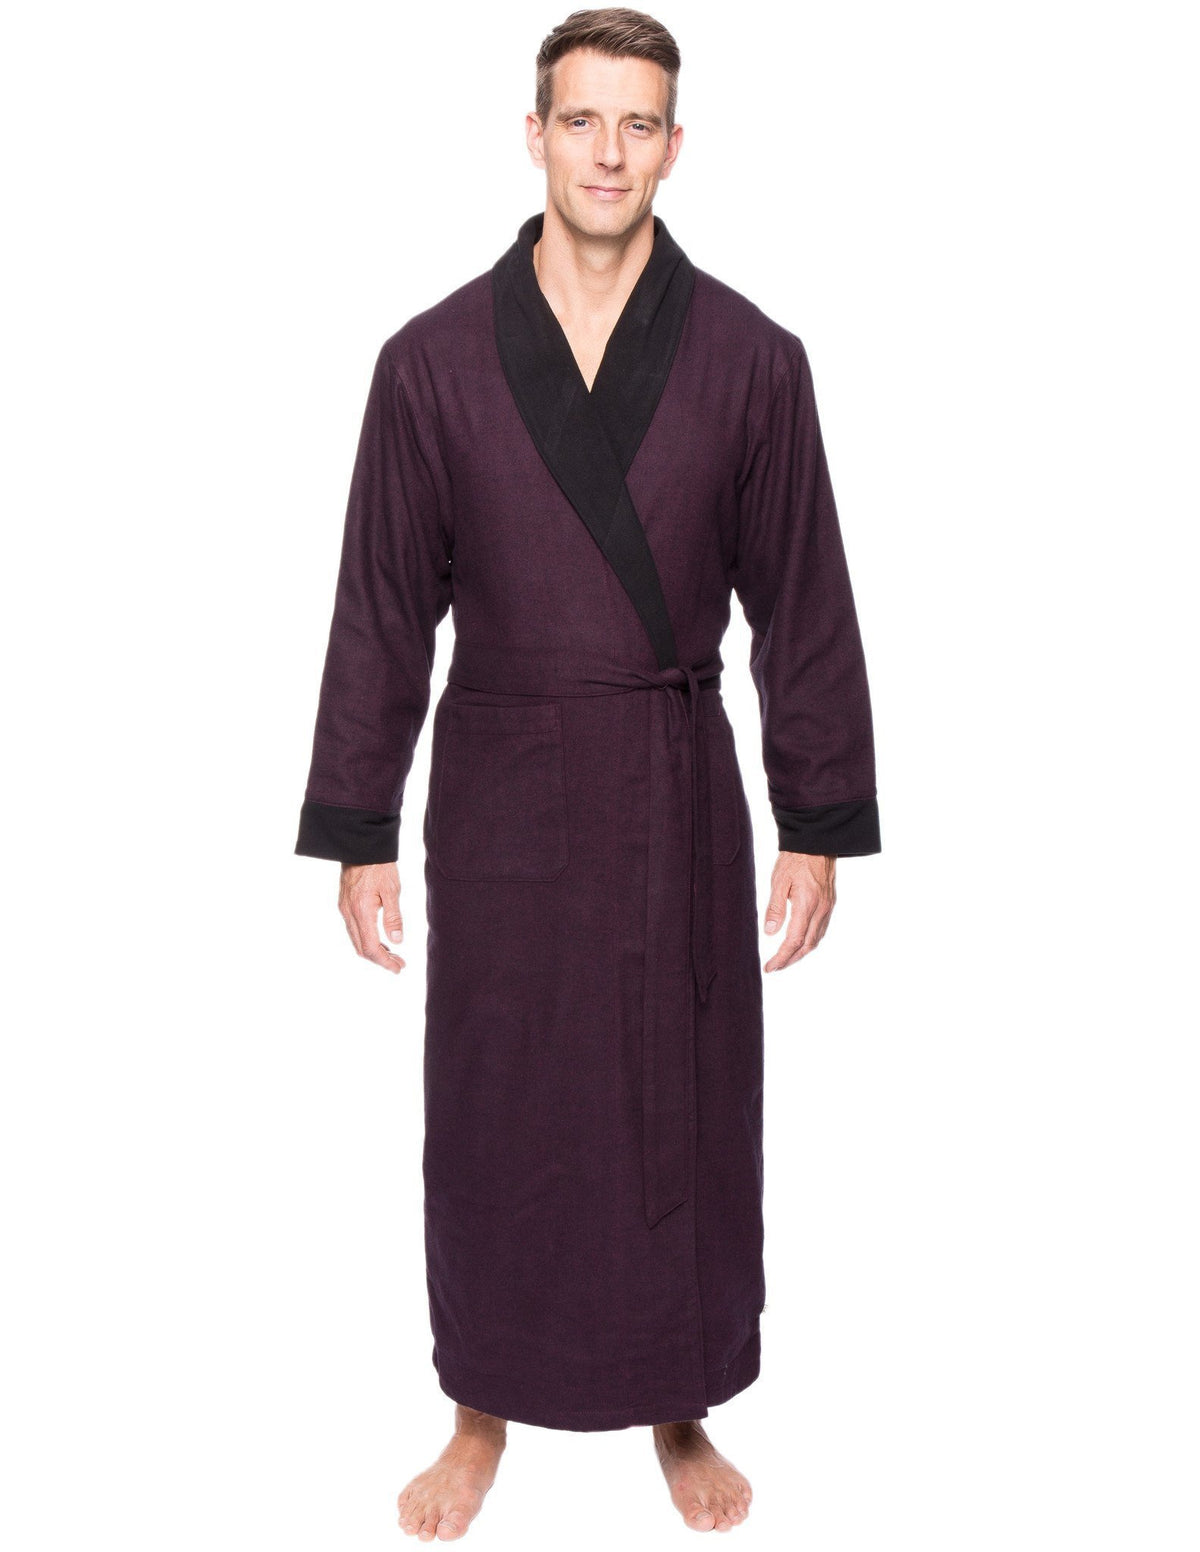 Men's Premium 100% Cotton Flannel Fleece Lined Robe - Herringbone Fig/Black